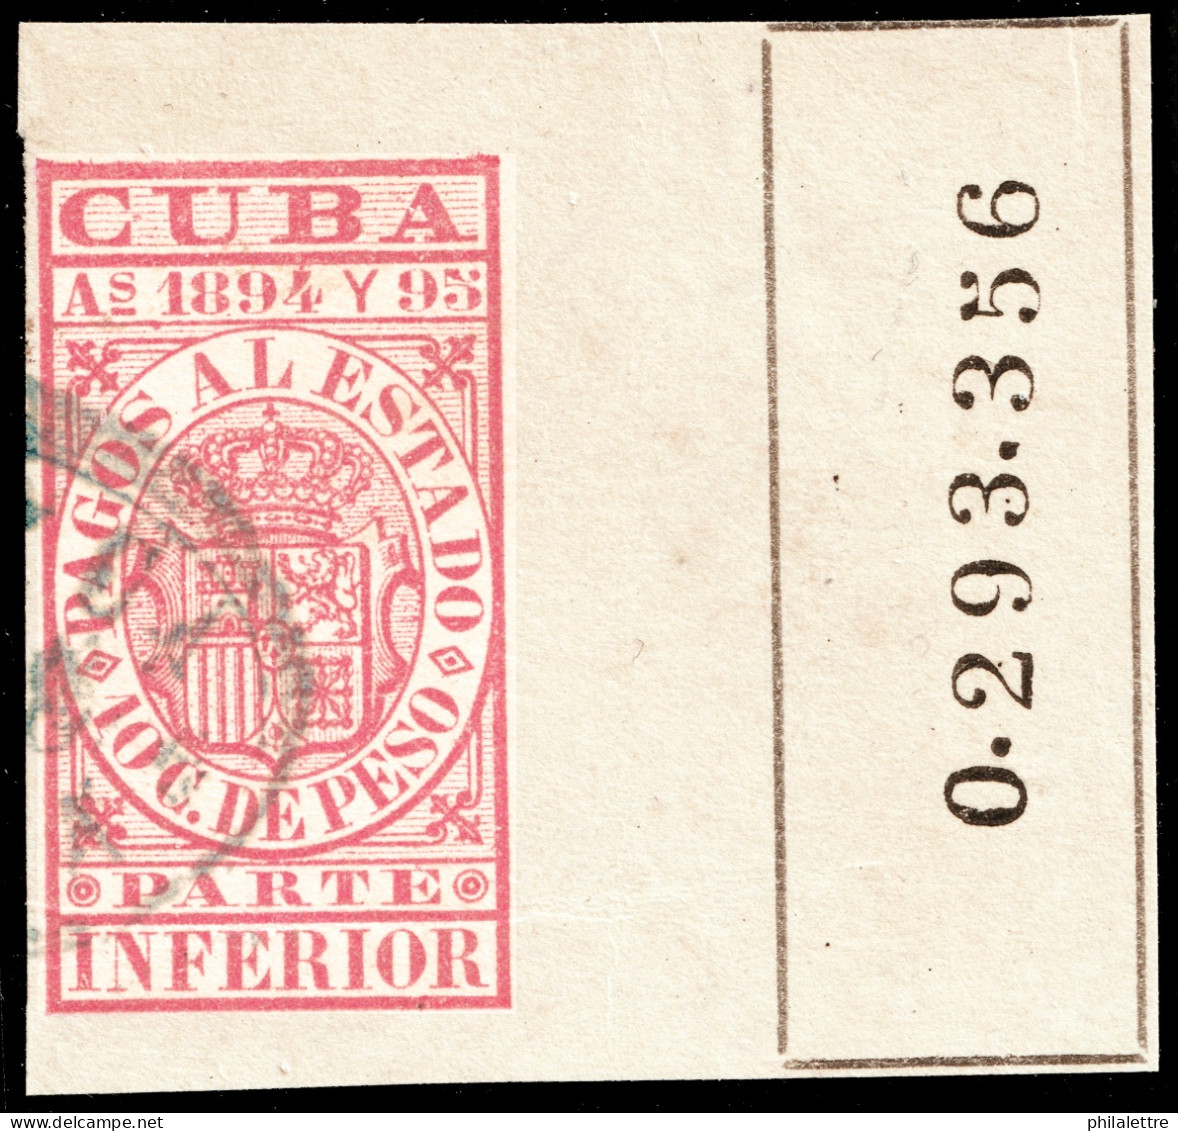 ESPAGNE / ESPANA - COLONIAS (Cuba) 1894/95 "PAGOS AL ESTADO" Fulcher 1150 10c Sello Parte Inferior Usado (0.293.356) - Cuba (1874-1898)